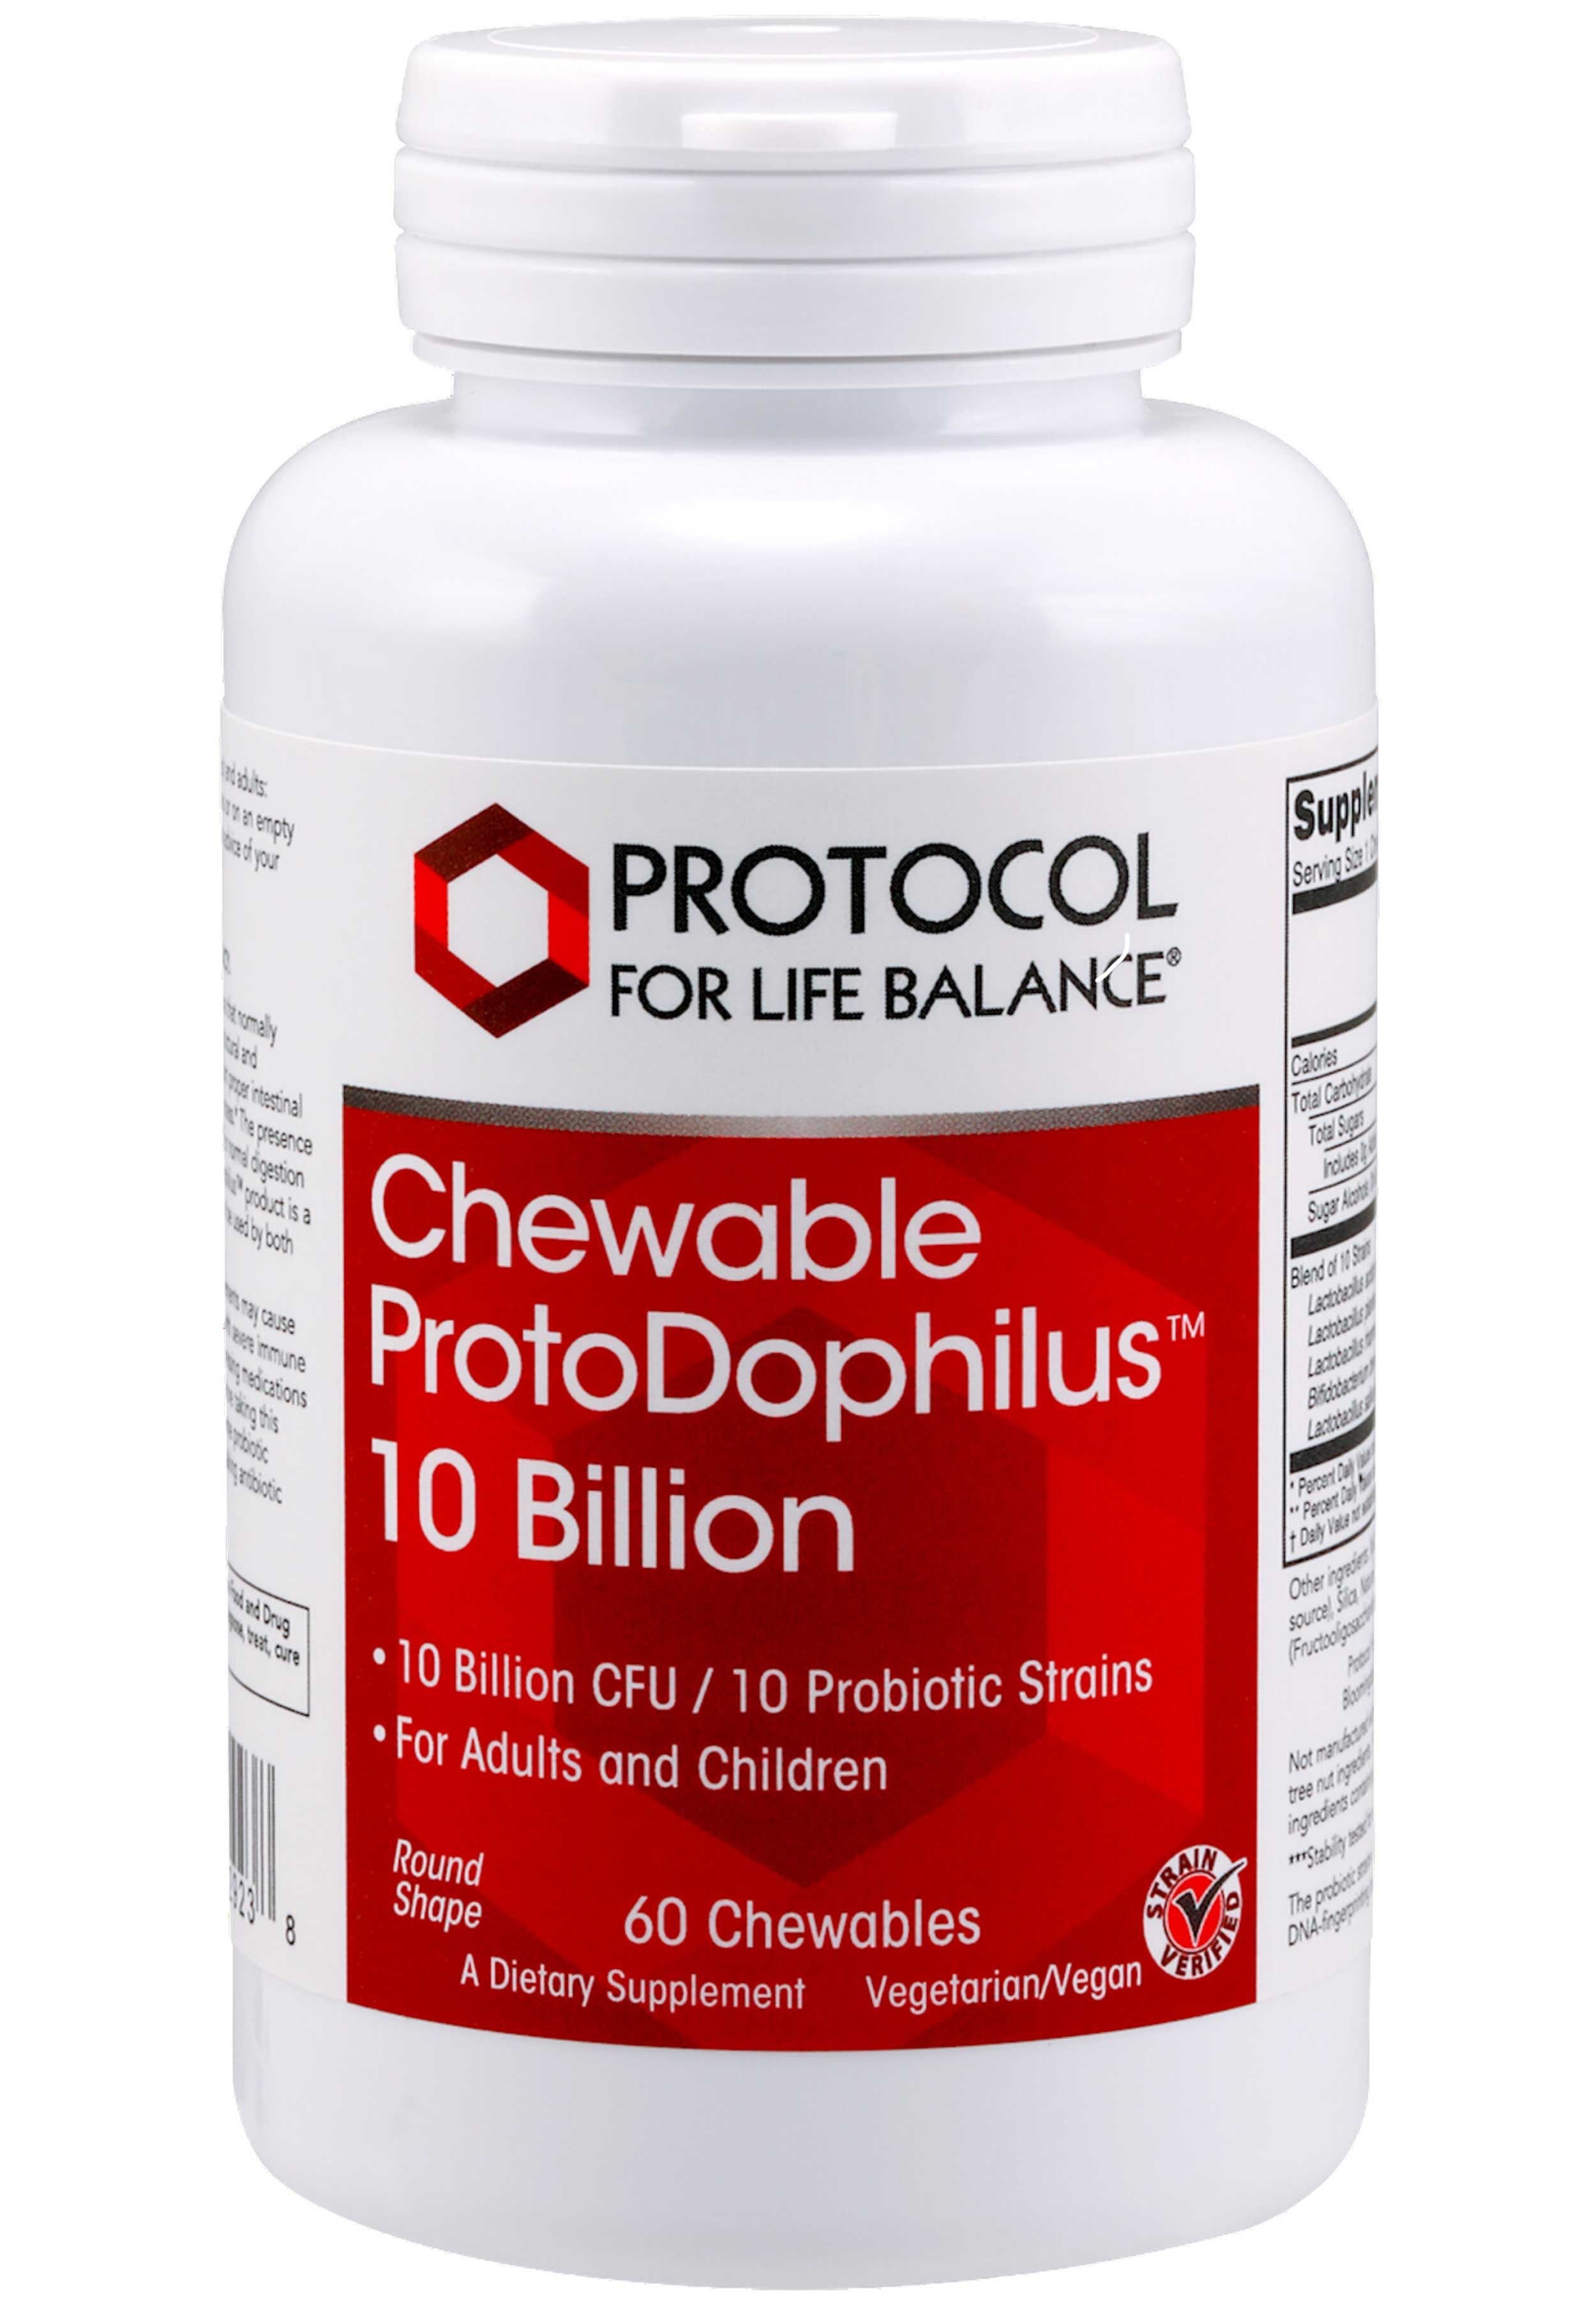 Protocol for Life Balance Chewable ProtoDophilus 10 Billion